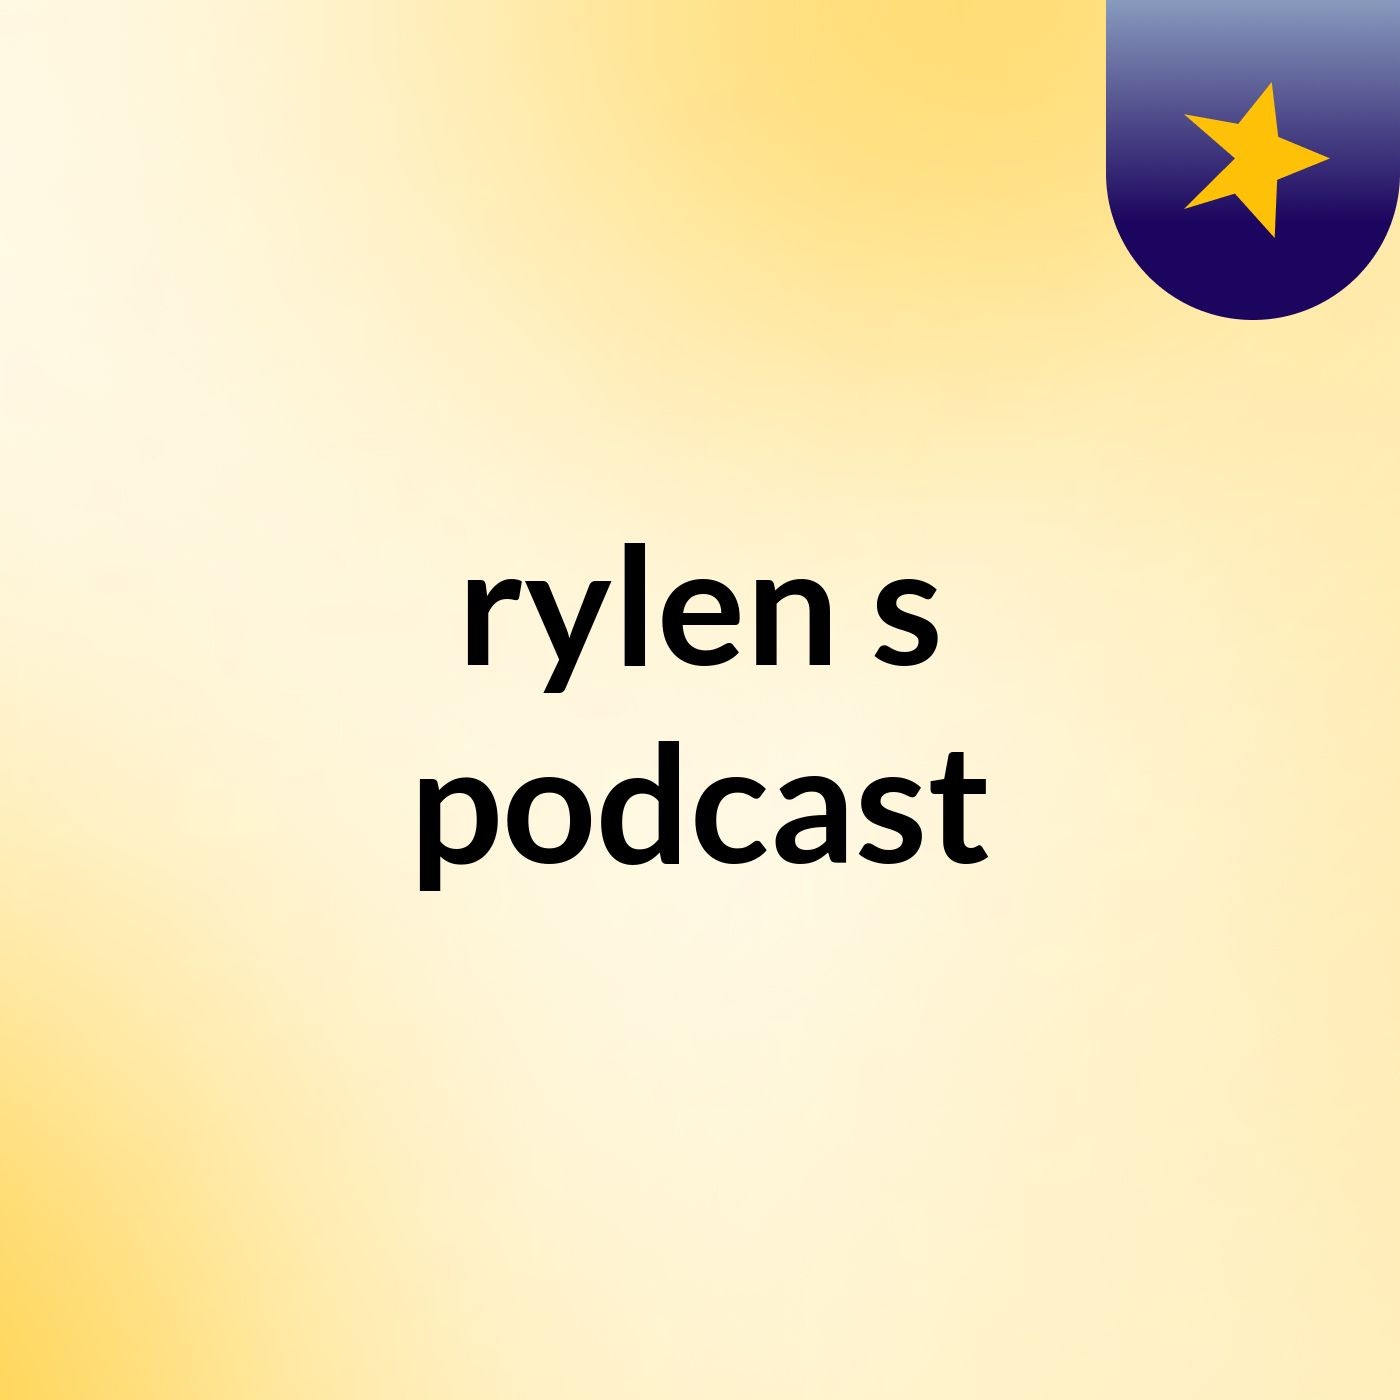 rylen's podcast